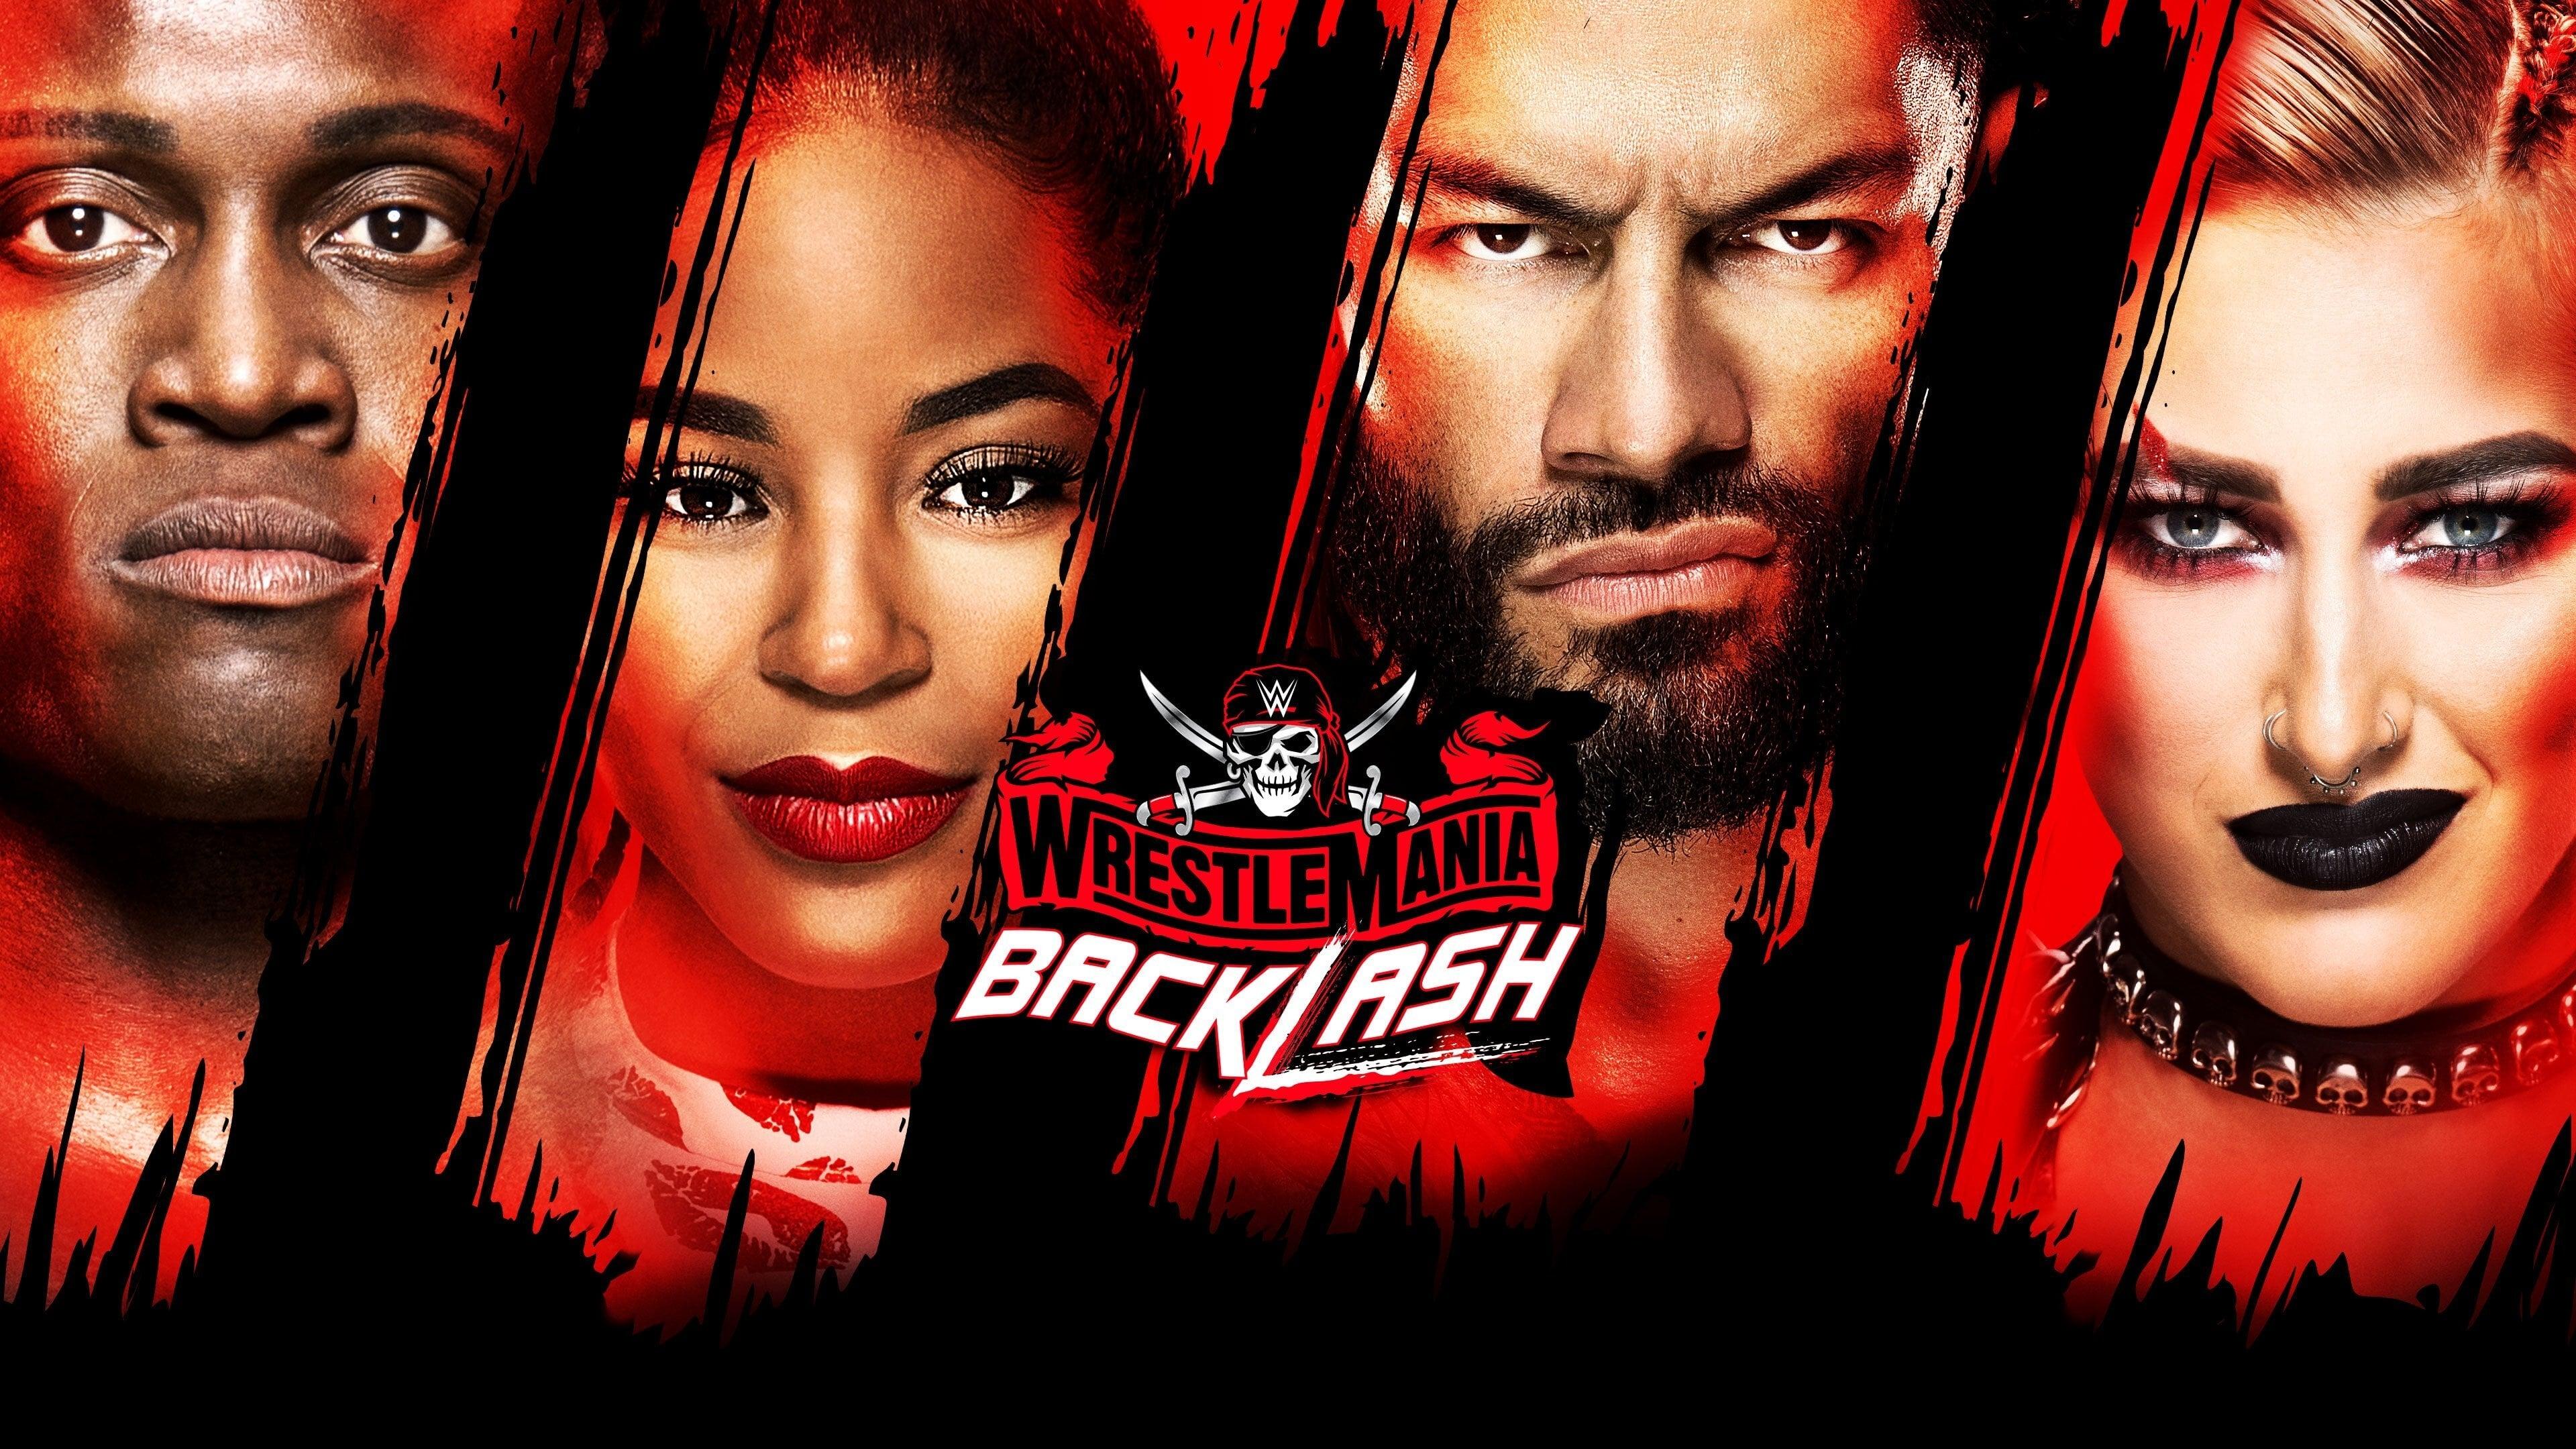 WWE WrestleMania Backlash backdrop